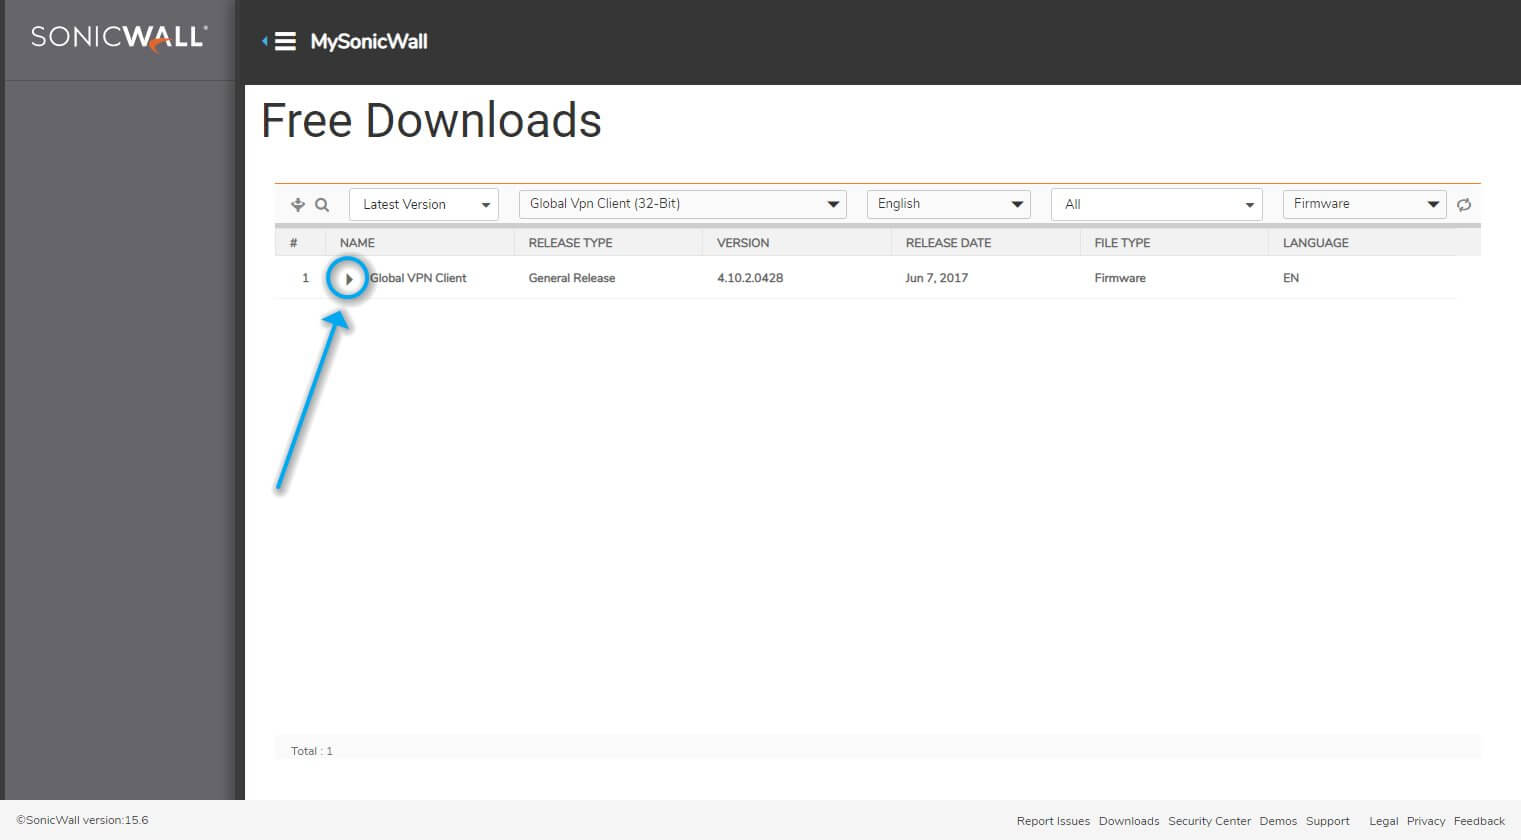 sonicwall tz 210 global vpn client download